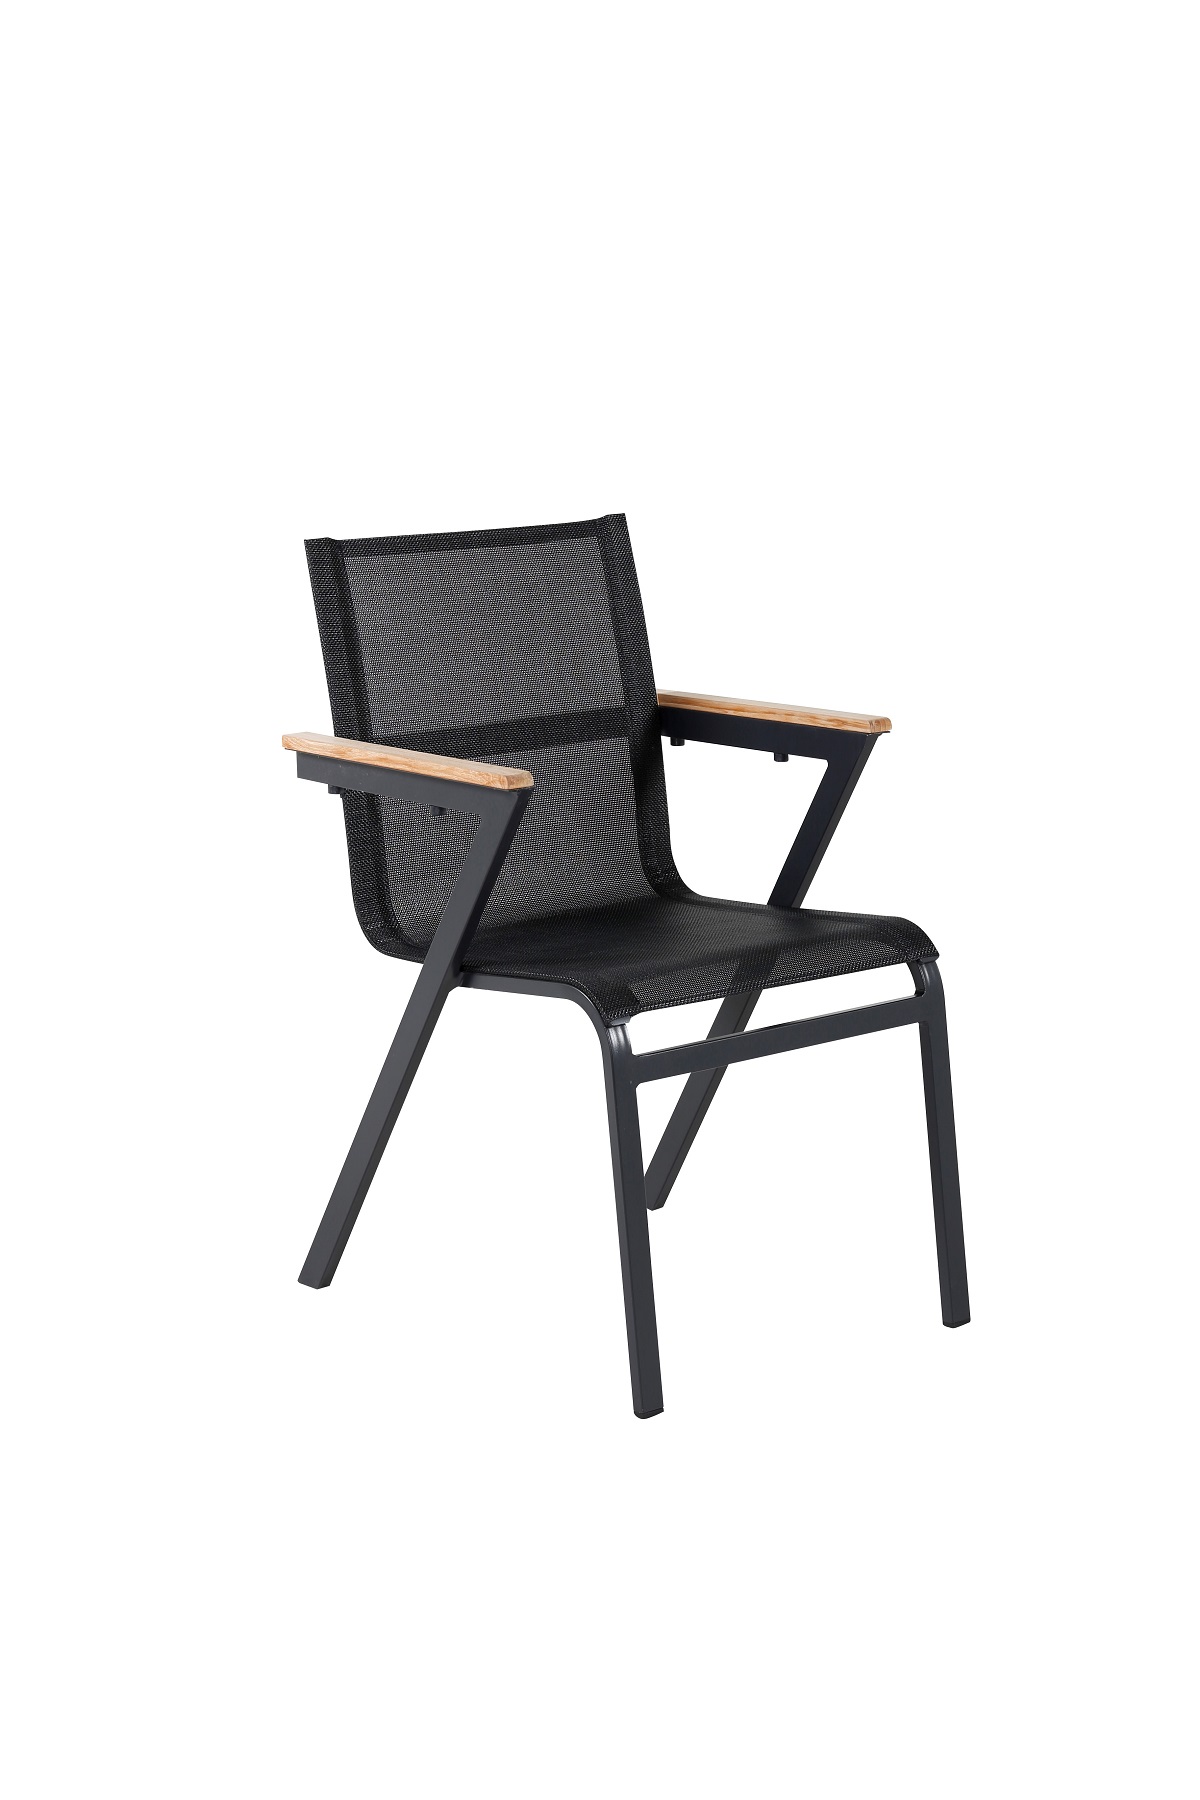 Venture Design - Mexico Garden Chair -  Alu/Textilene/Teak box - Black/Black (6083-520)